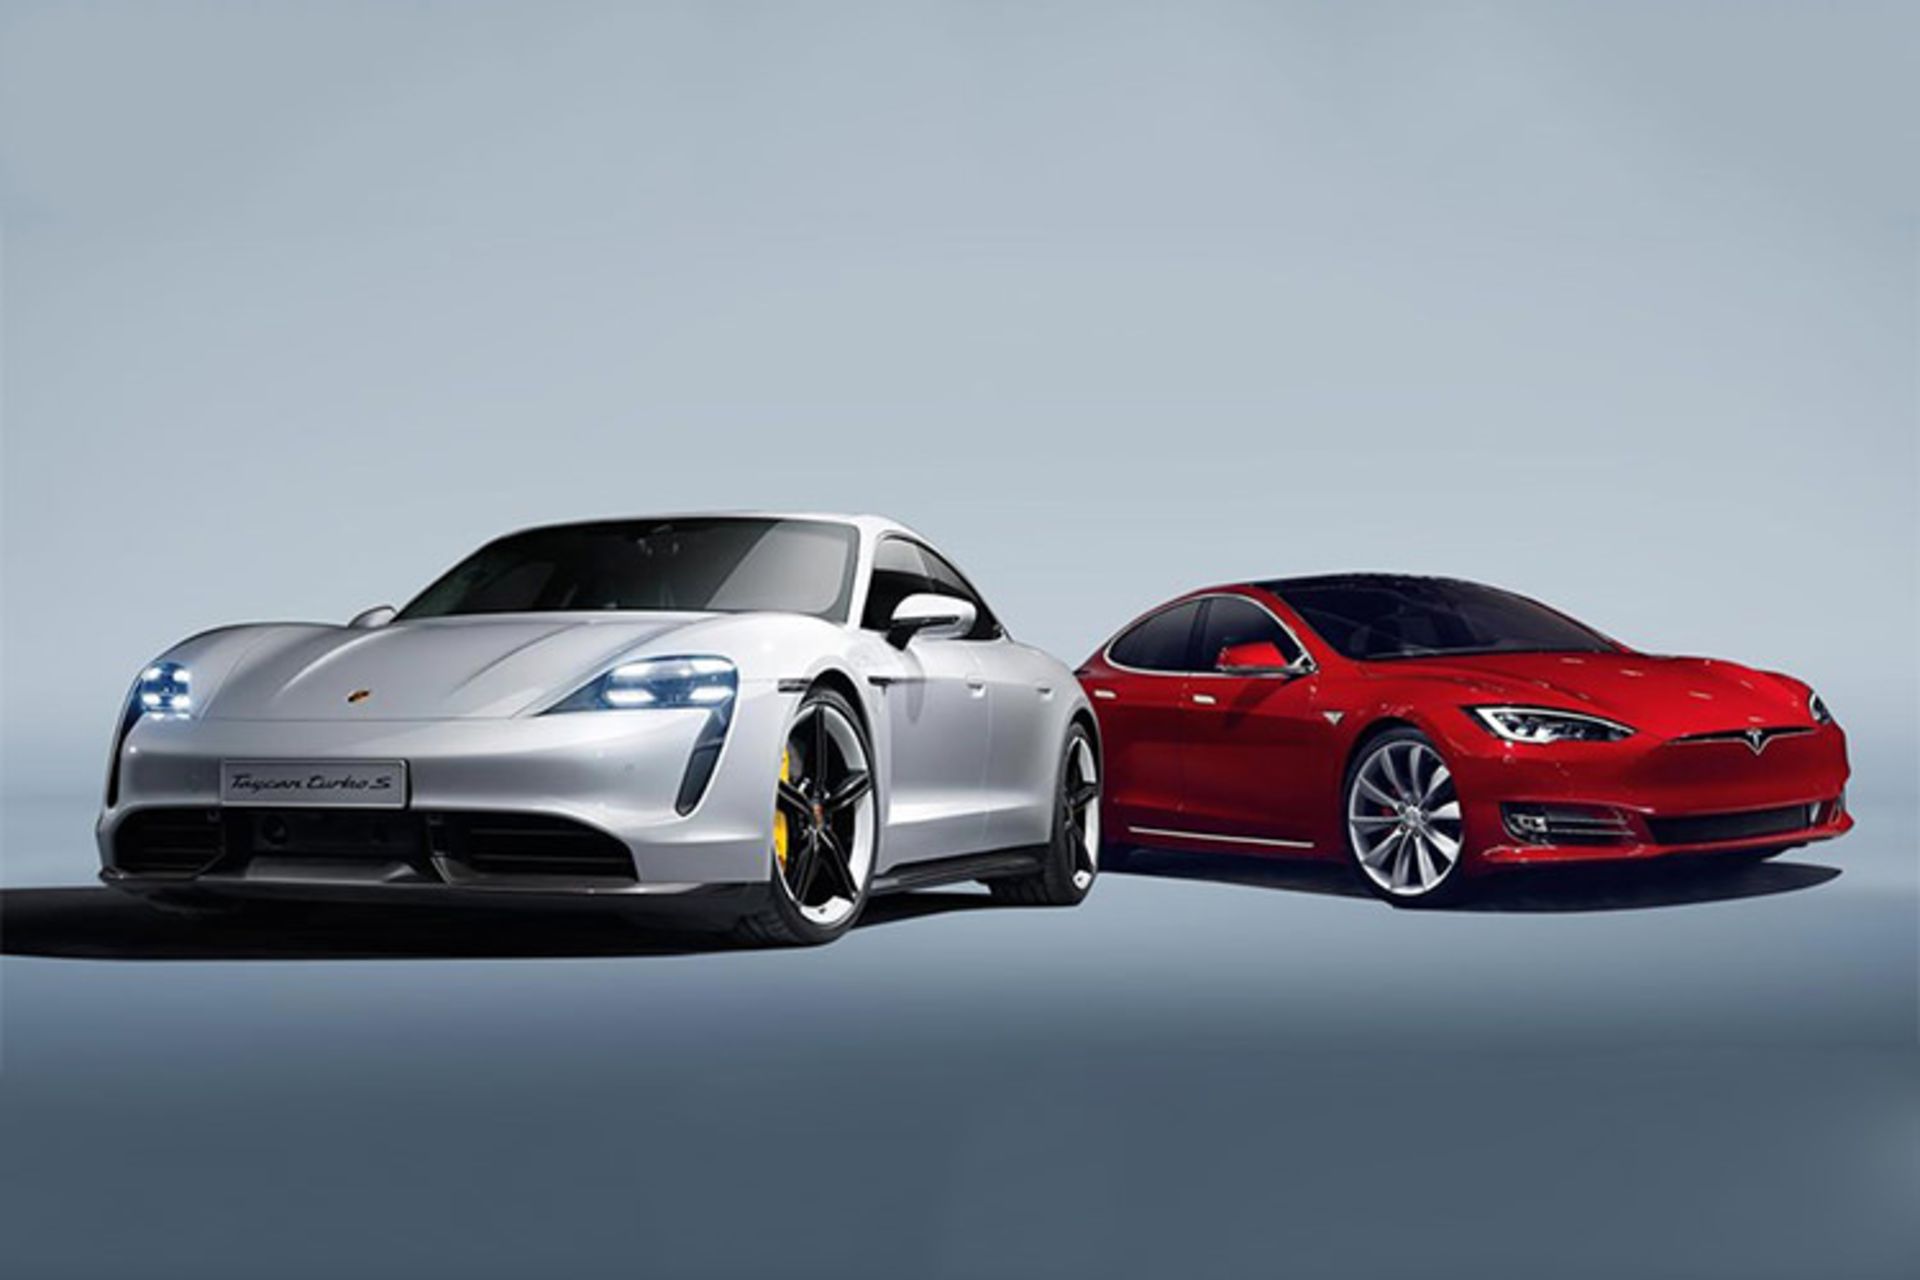 Porsche Taycan - Tesla Model S